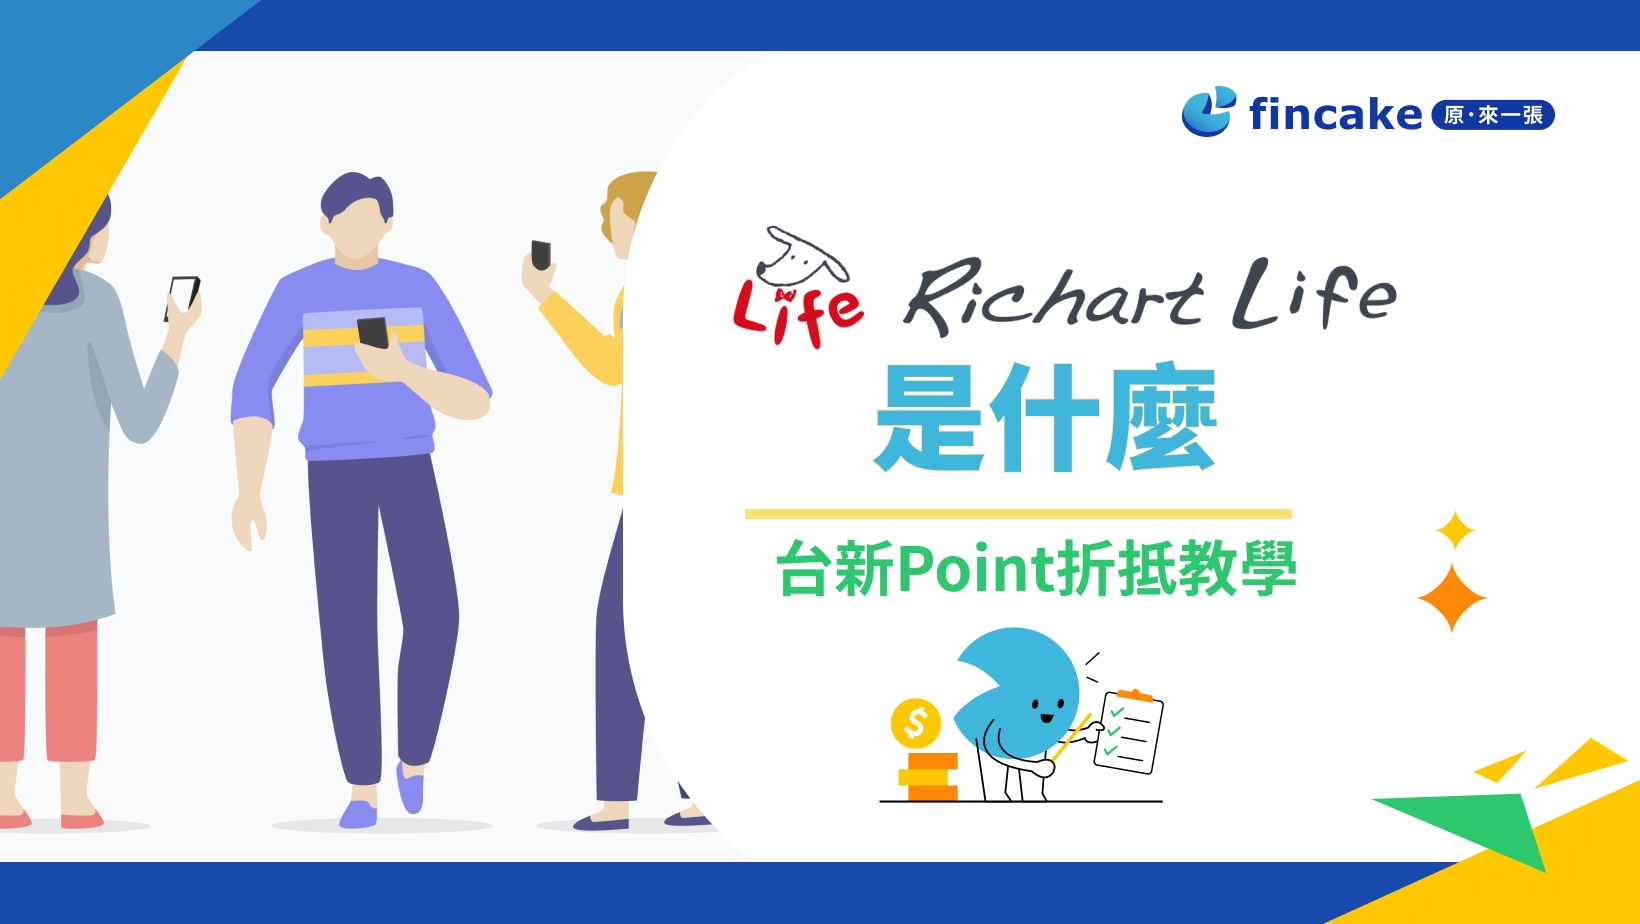 Richart Life 是什麼